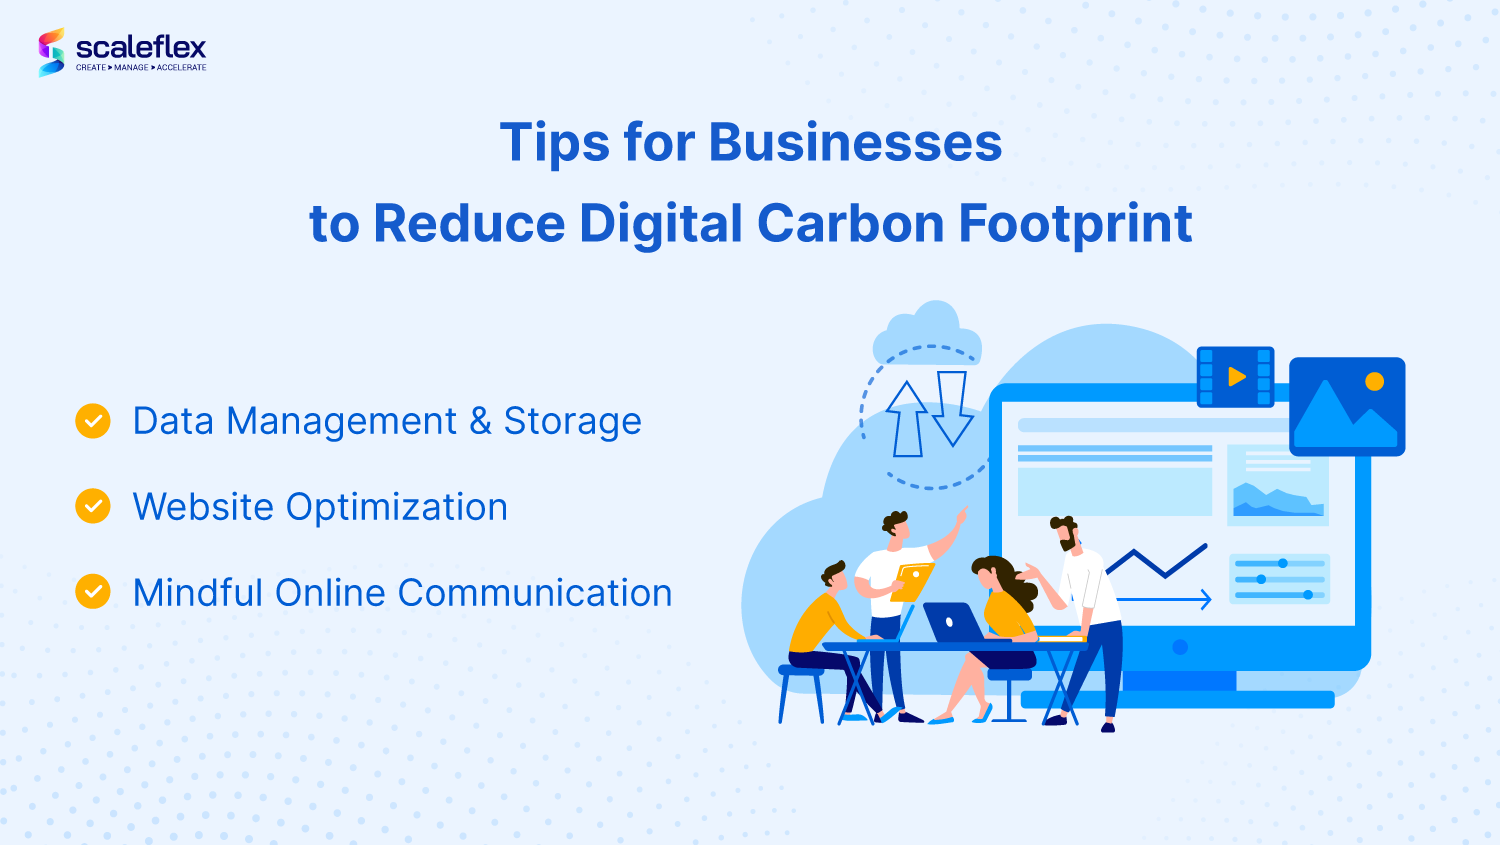 Reduce Digital Carbon Footprint Tips